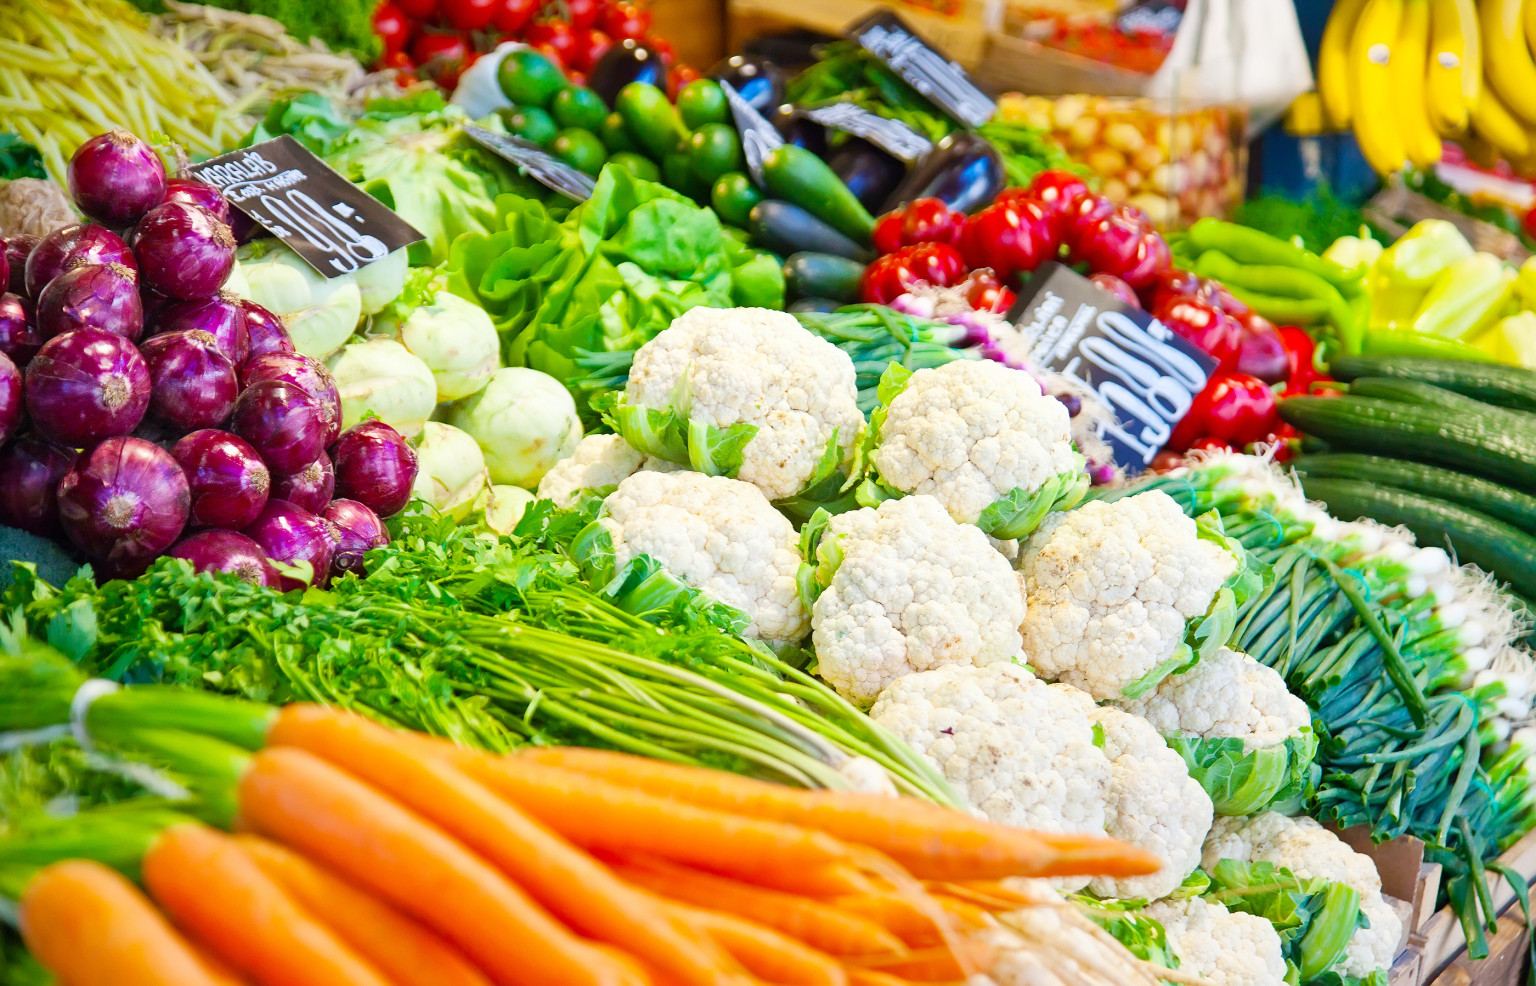 Azerbaijan's major export for 1H2020 falls on fruits, vegetables